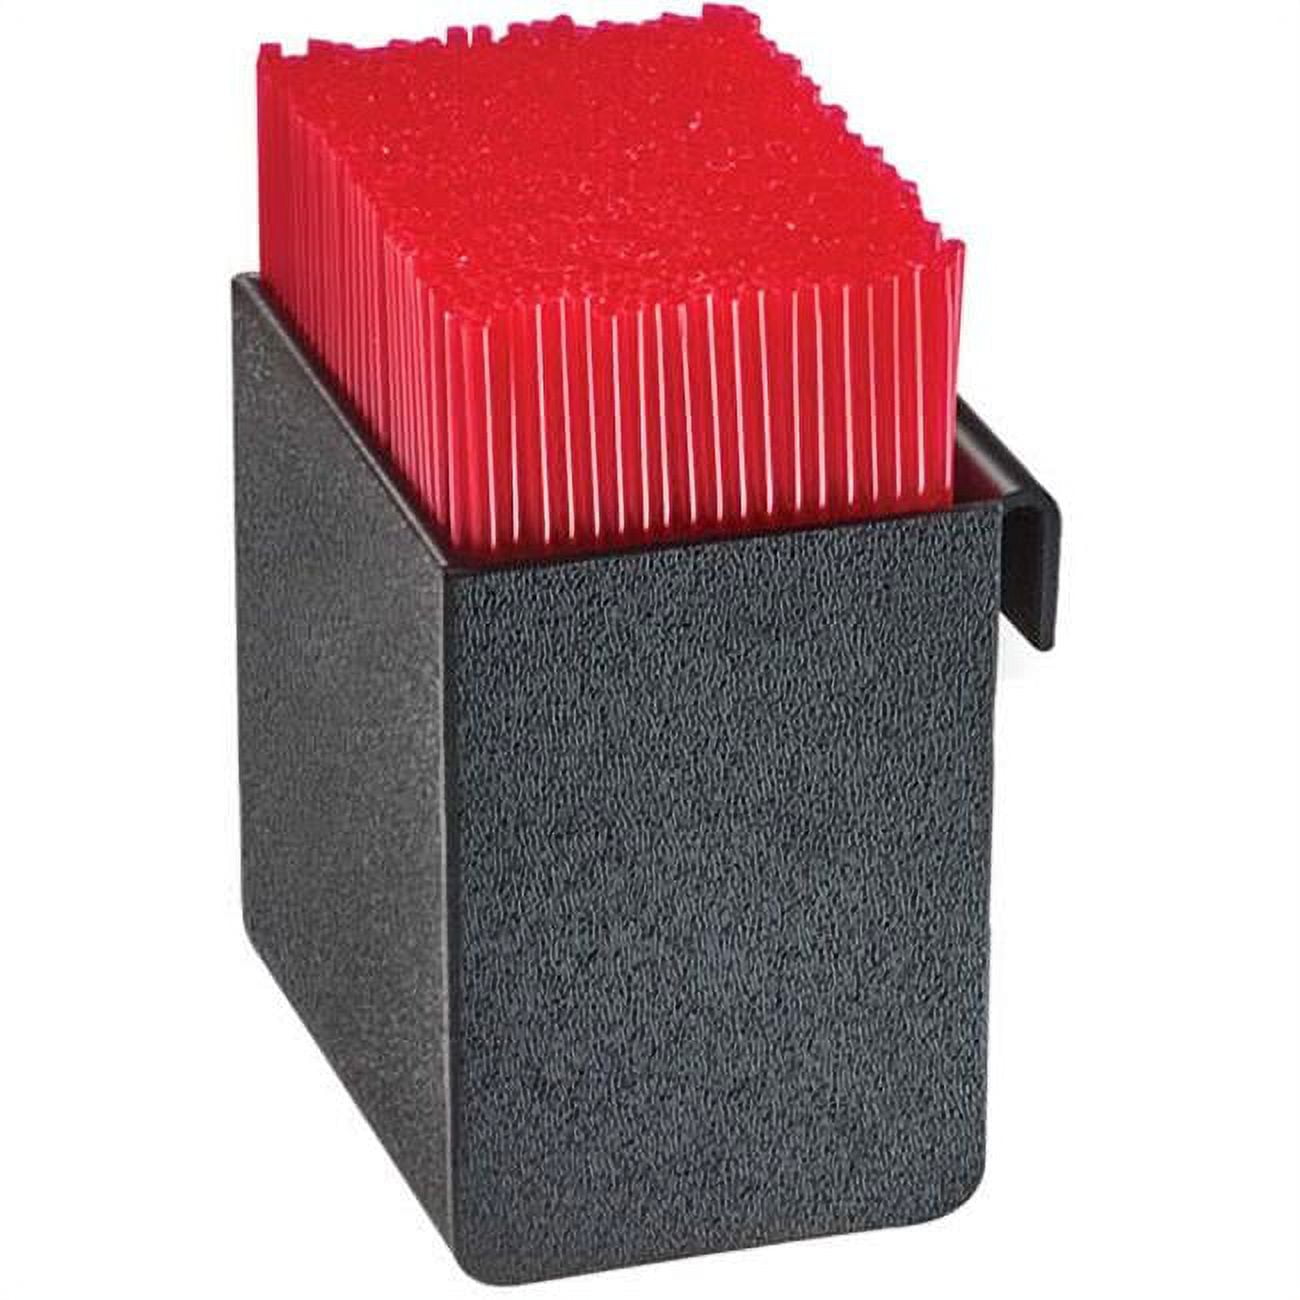 Picture of Cal Mil 3573-13 Black Slanted Organizer Plastic Stir Stick Holder - 3.375 x 3.75 x 4 in.